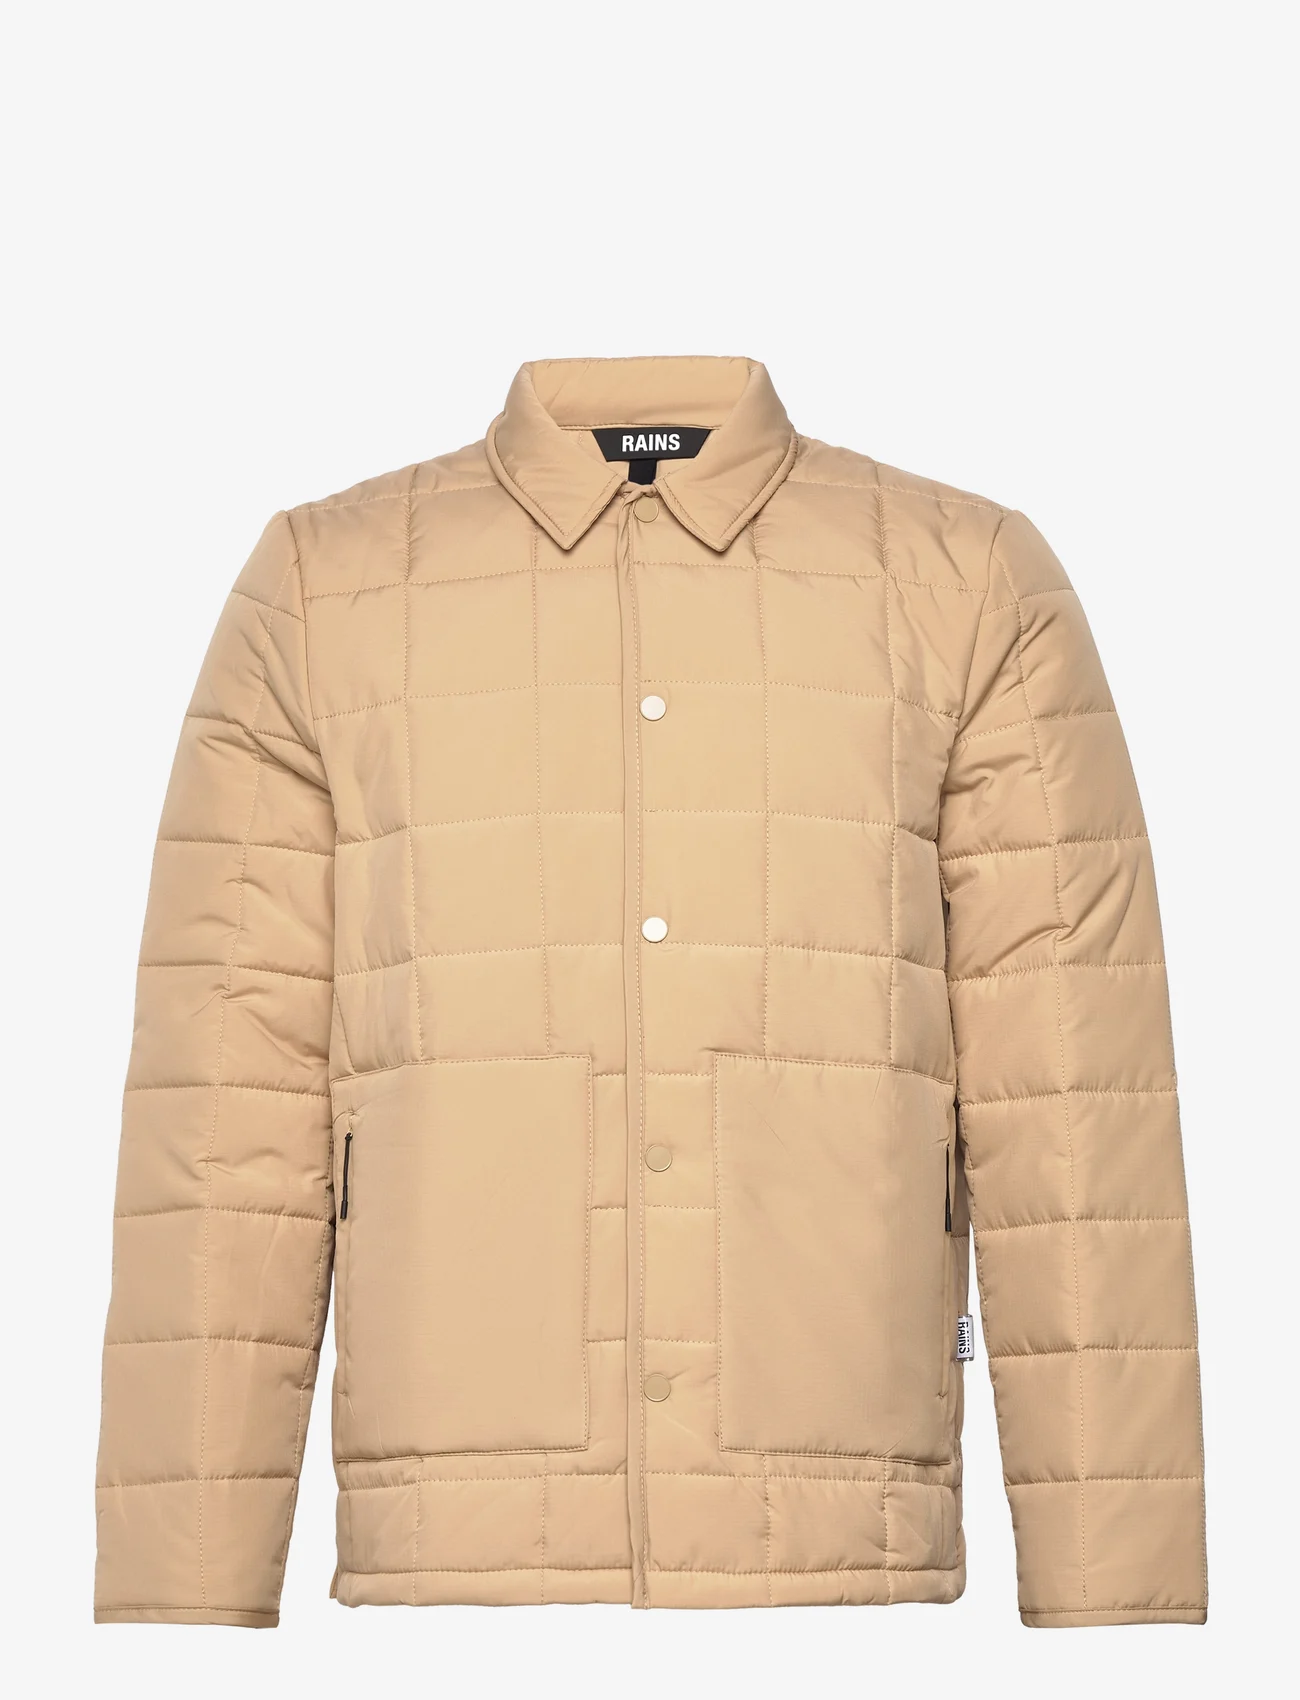 Rains - Liner Shirt Jacket W1T1 - spring jackets - 24 sand - 0